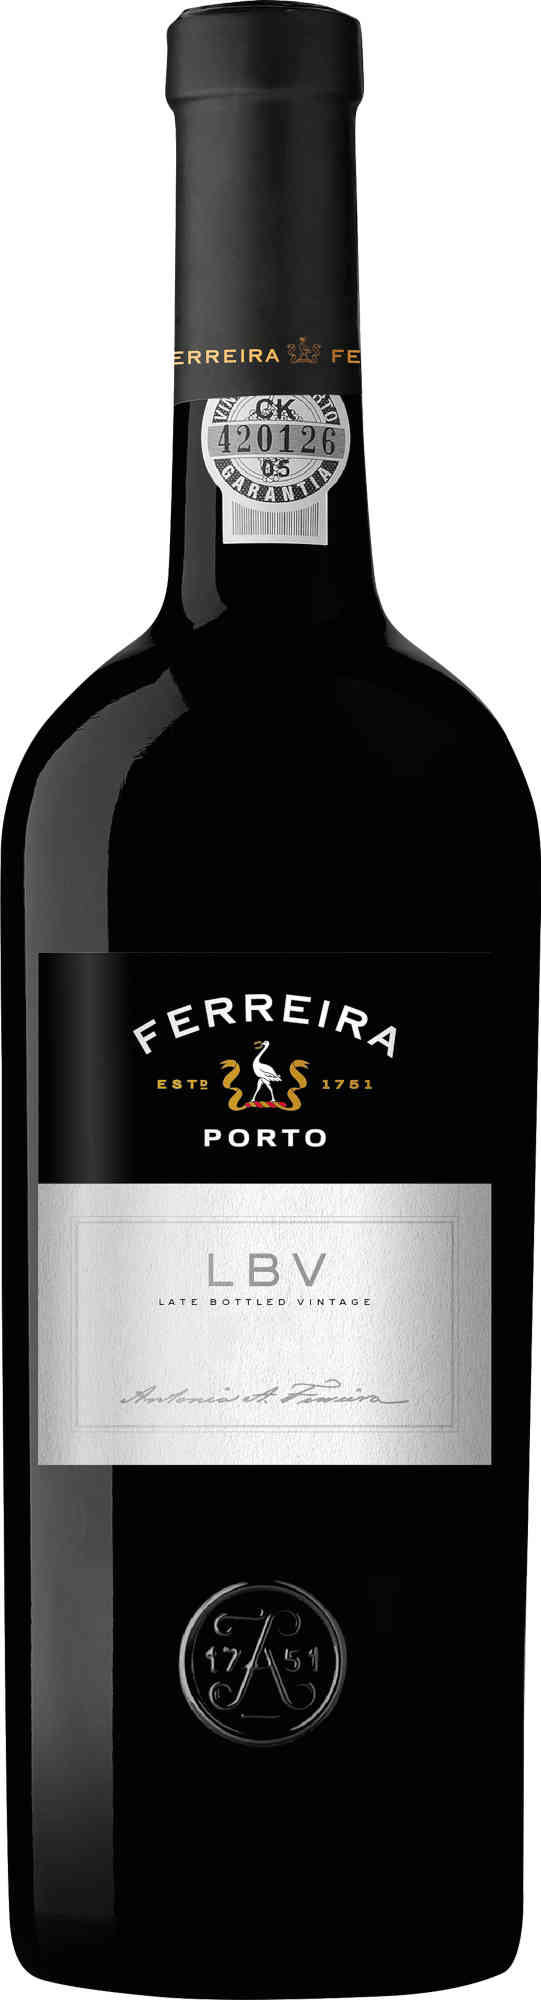 Ferreira-LBV